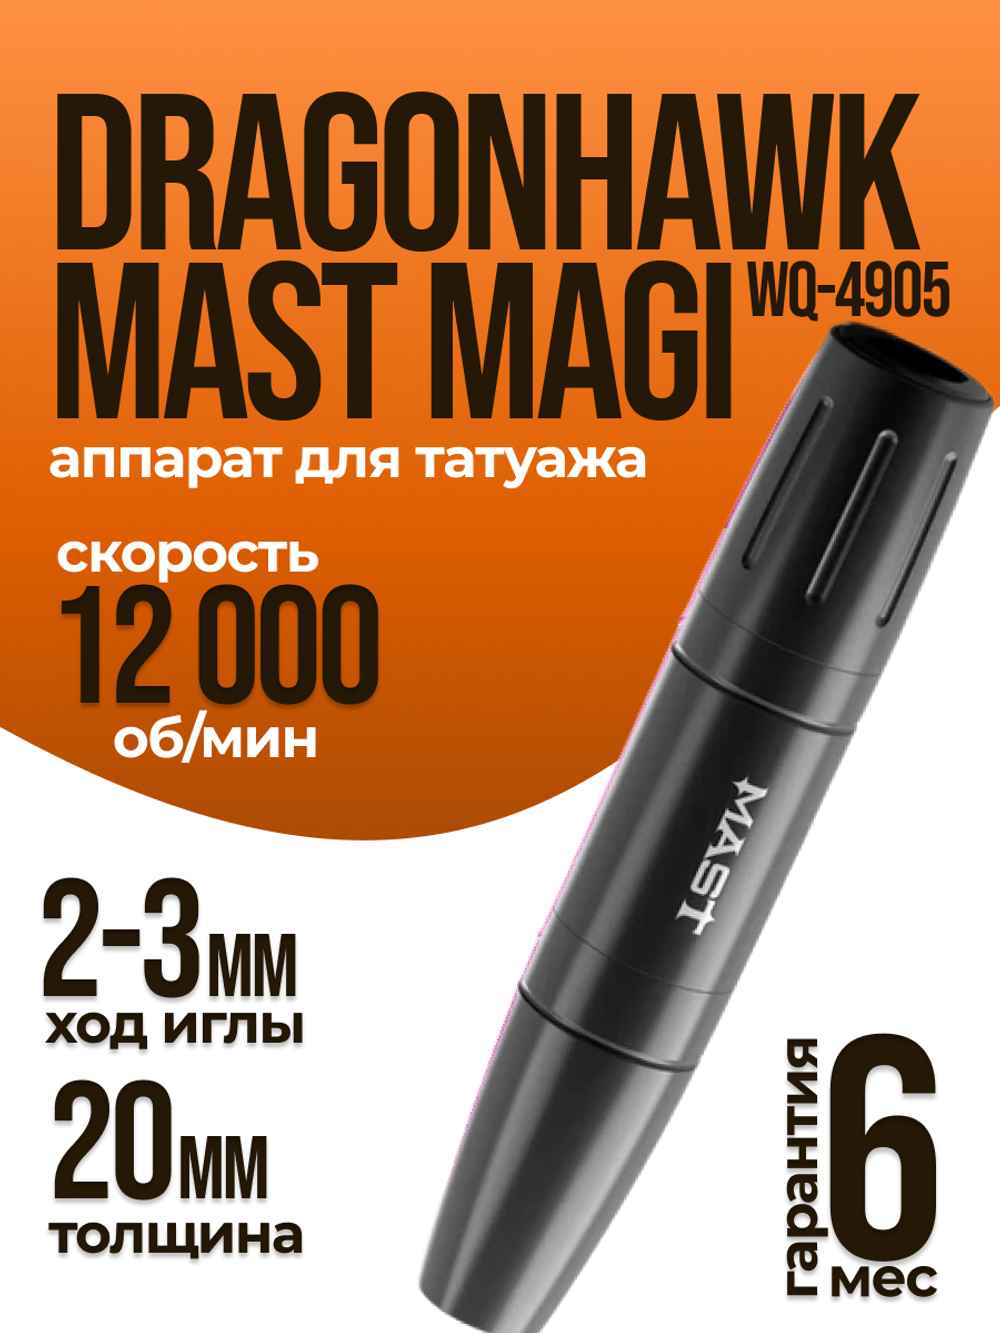 Аппарат для татуажа Dragonhawk Mast Magi WQ-4905